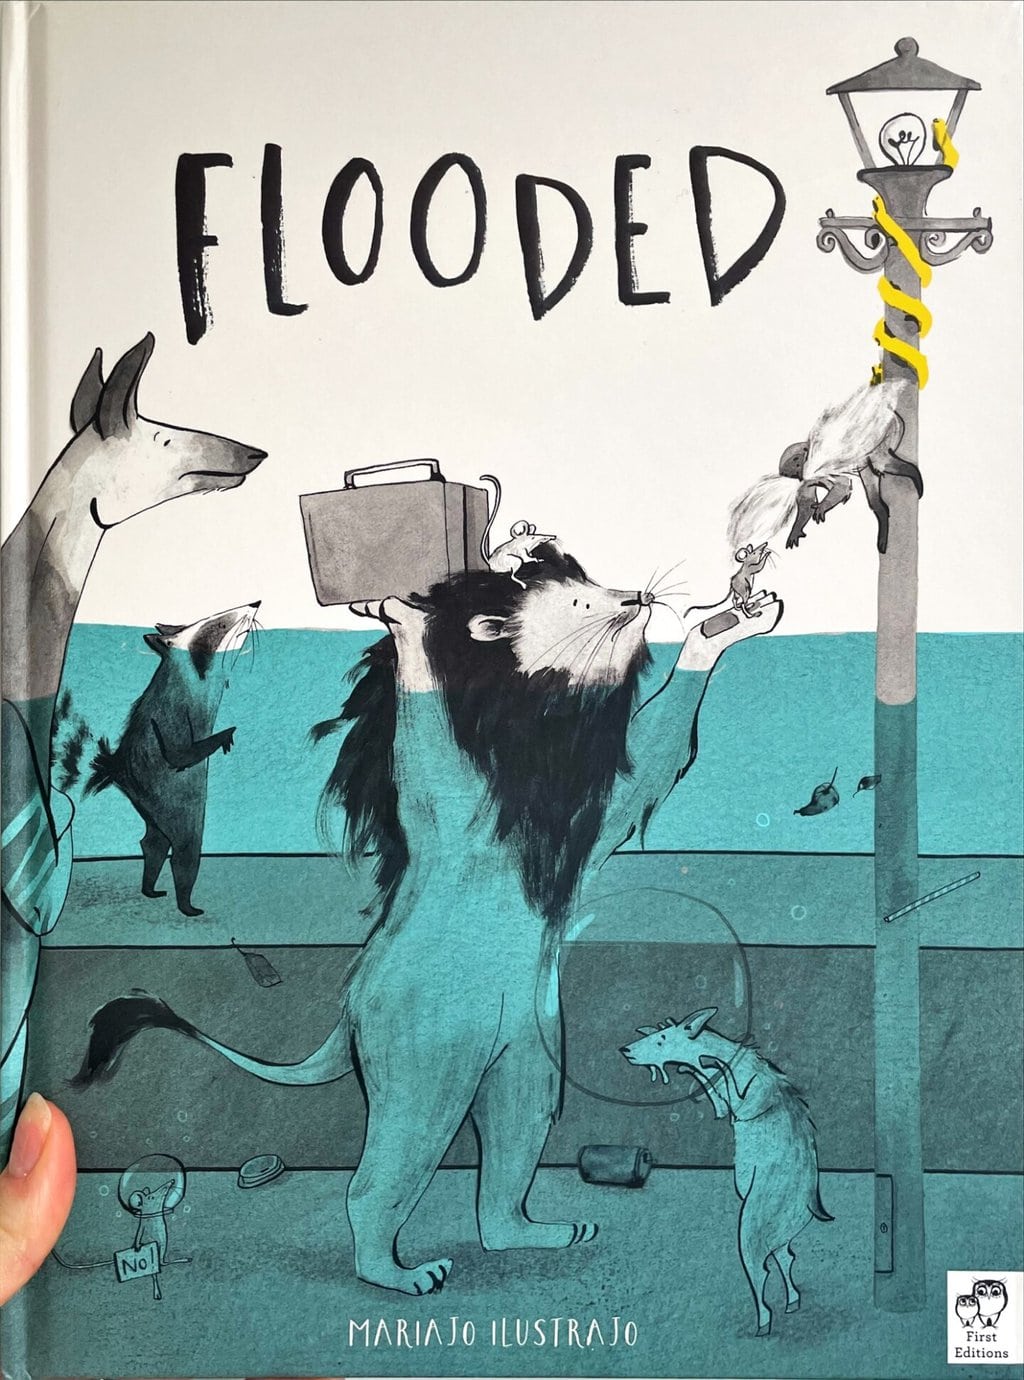 Flooded  - Mariajo Ilustrajo 